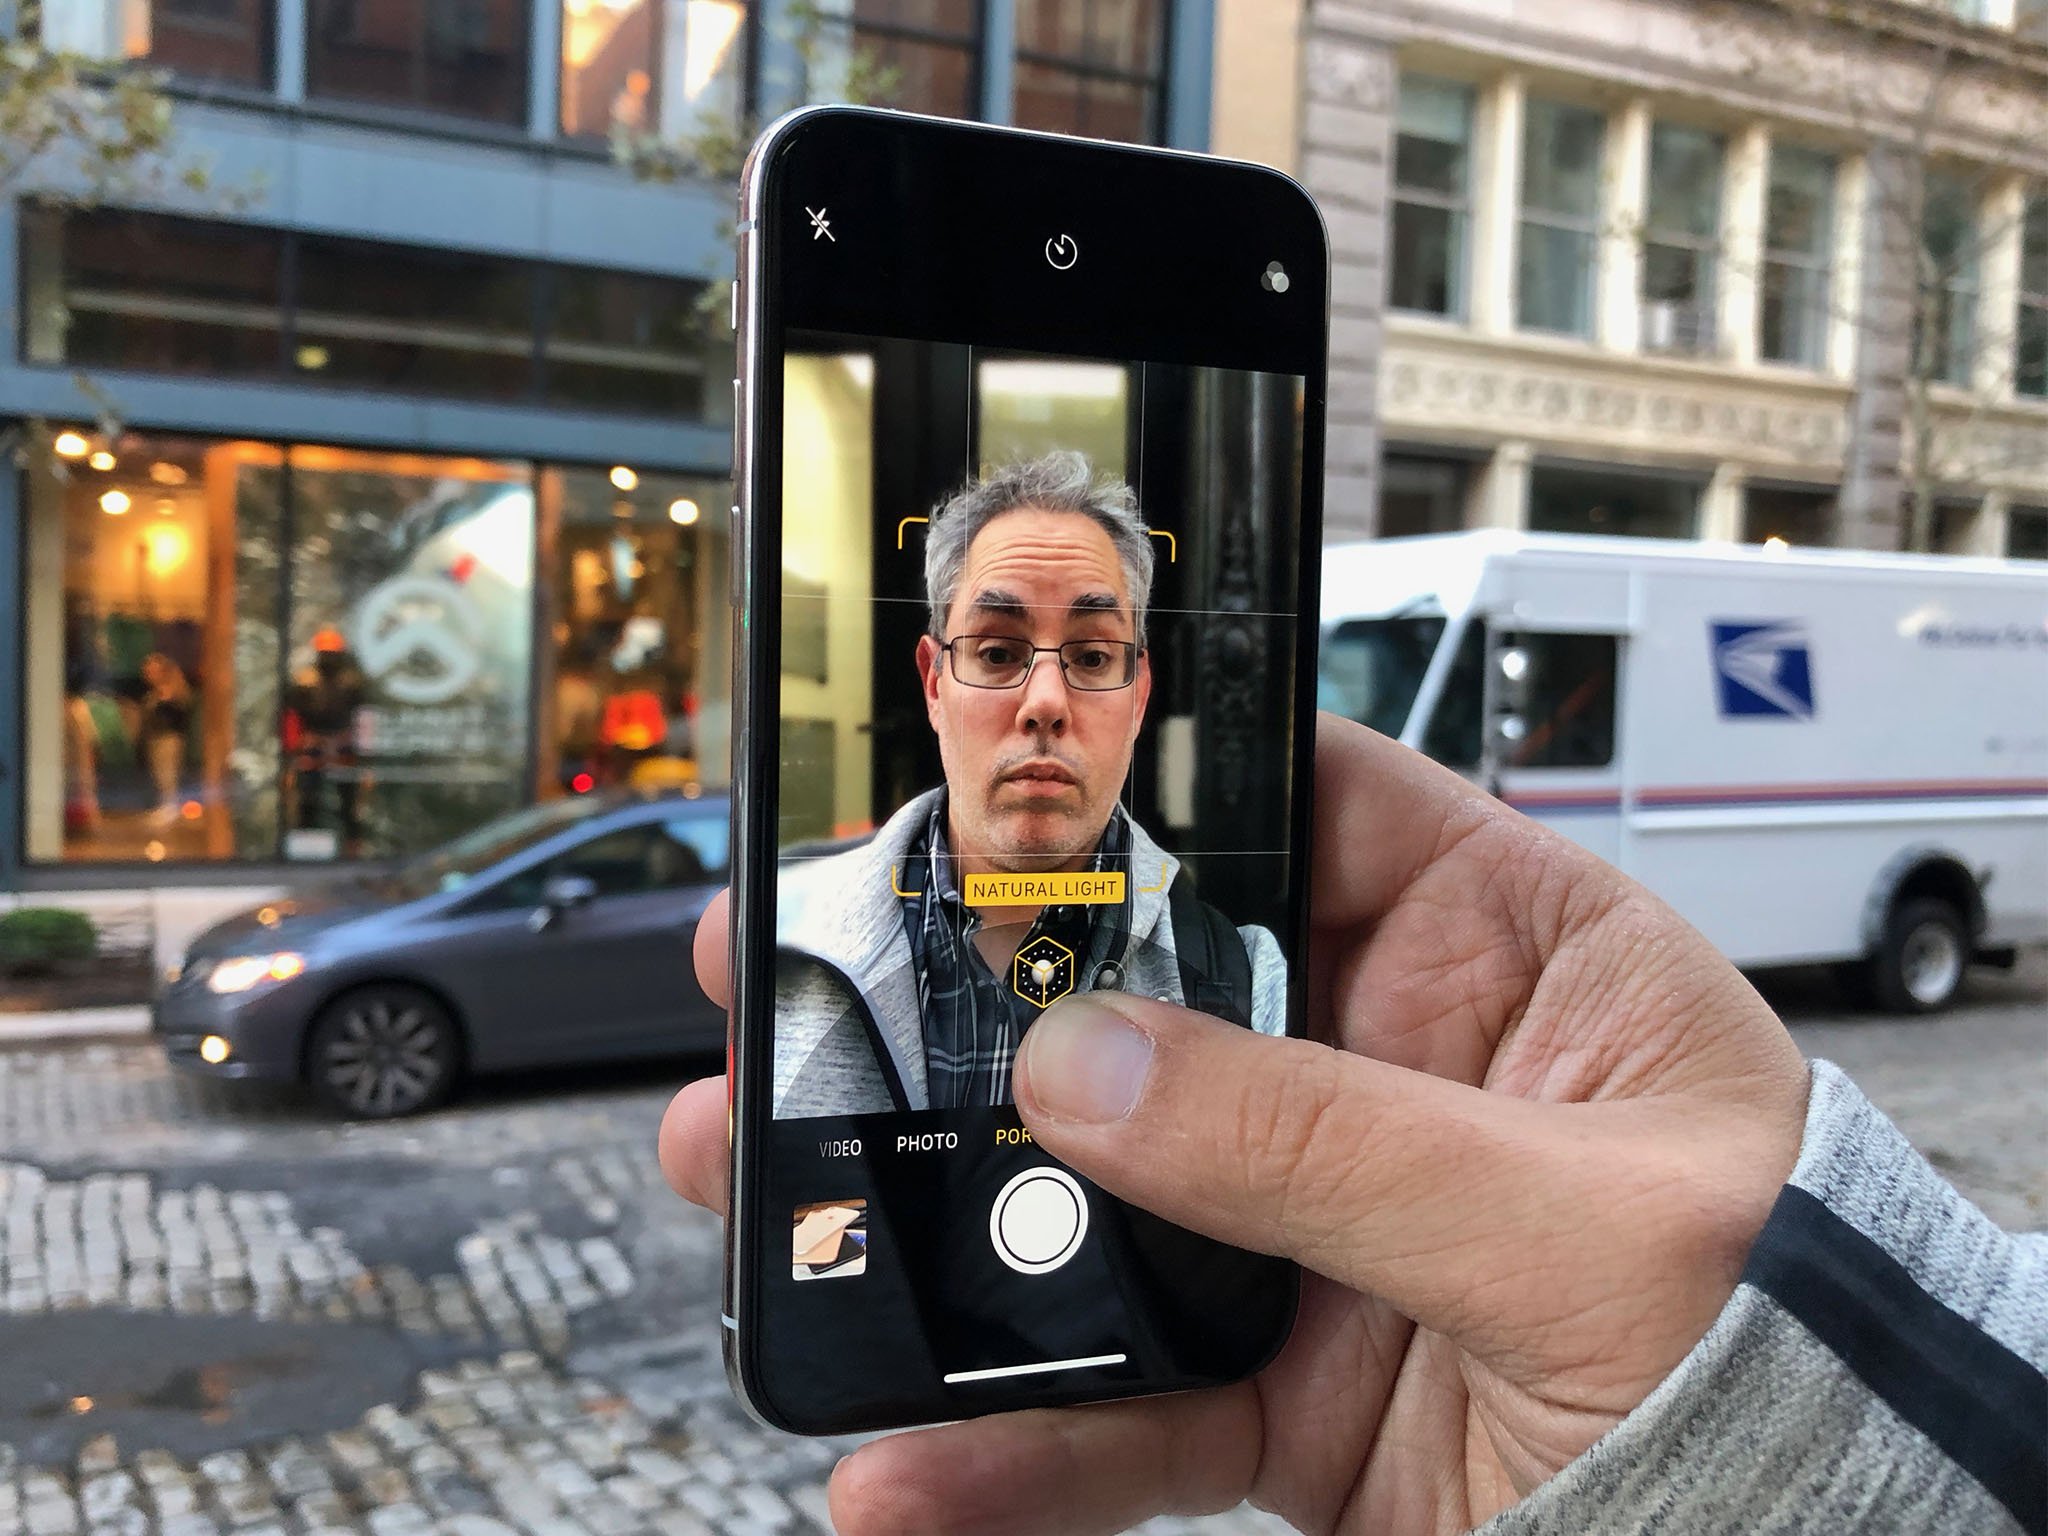 iPhone X portrait selfies